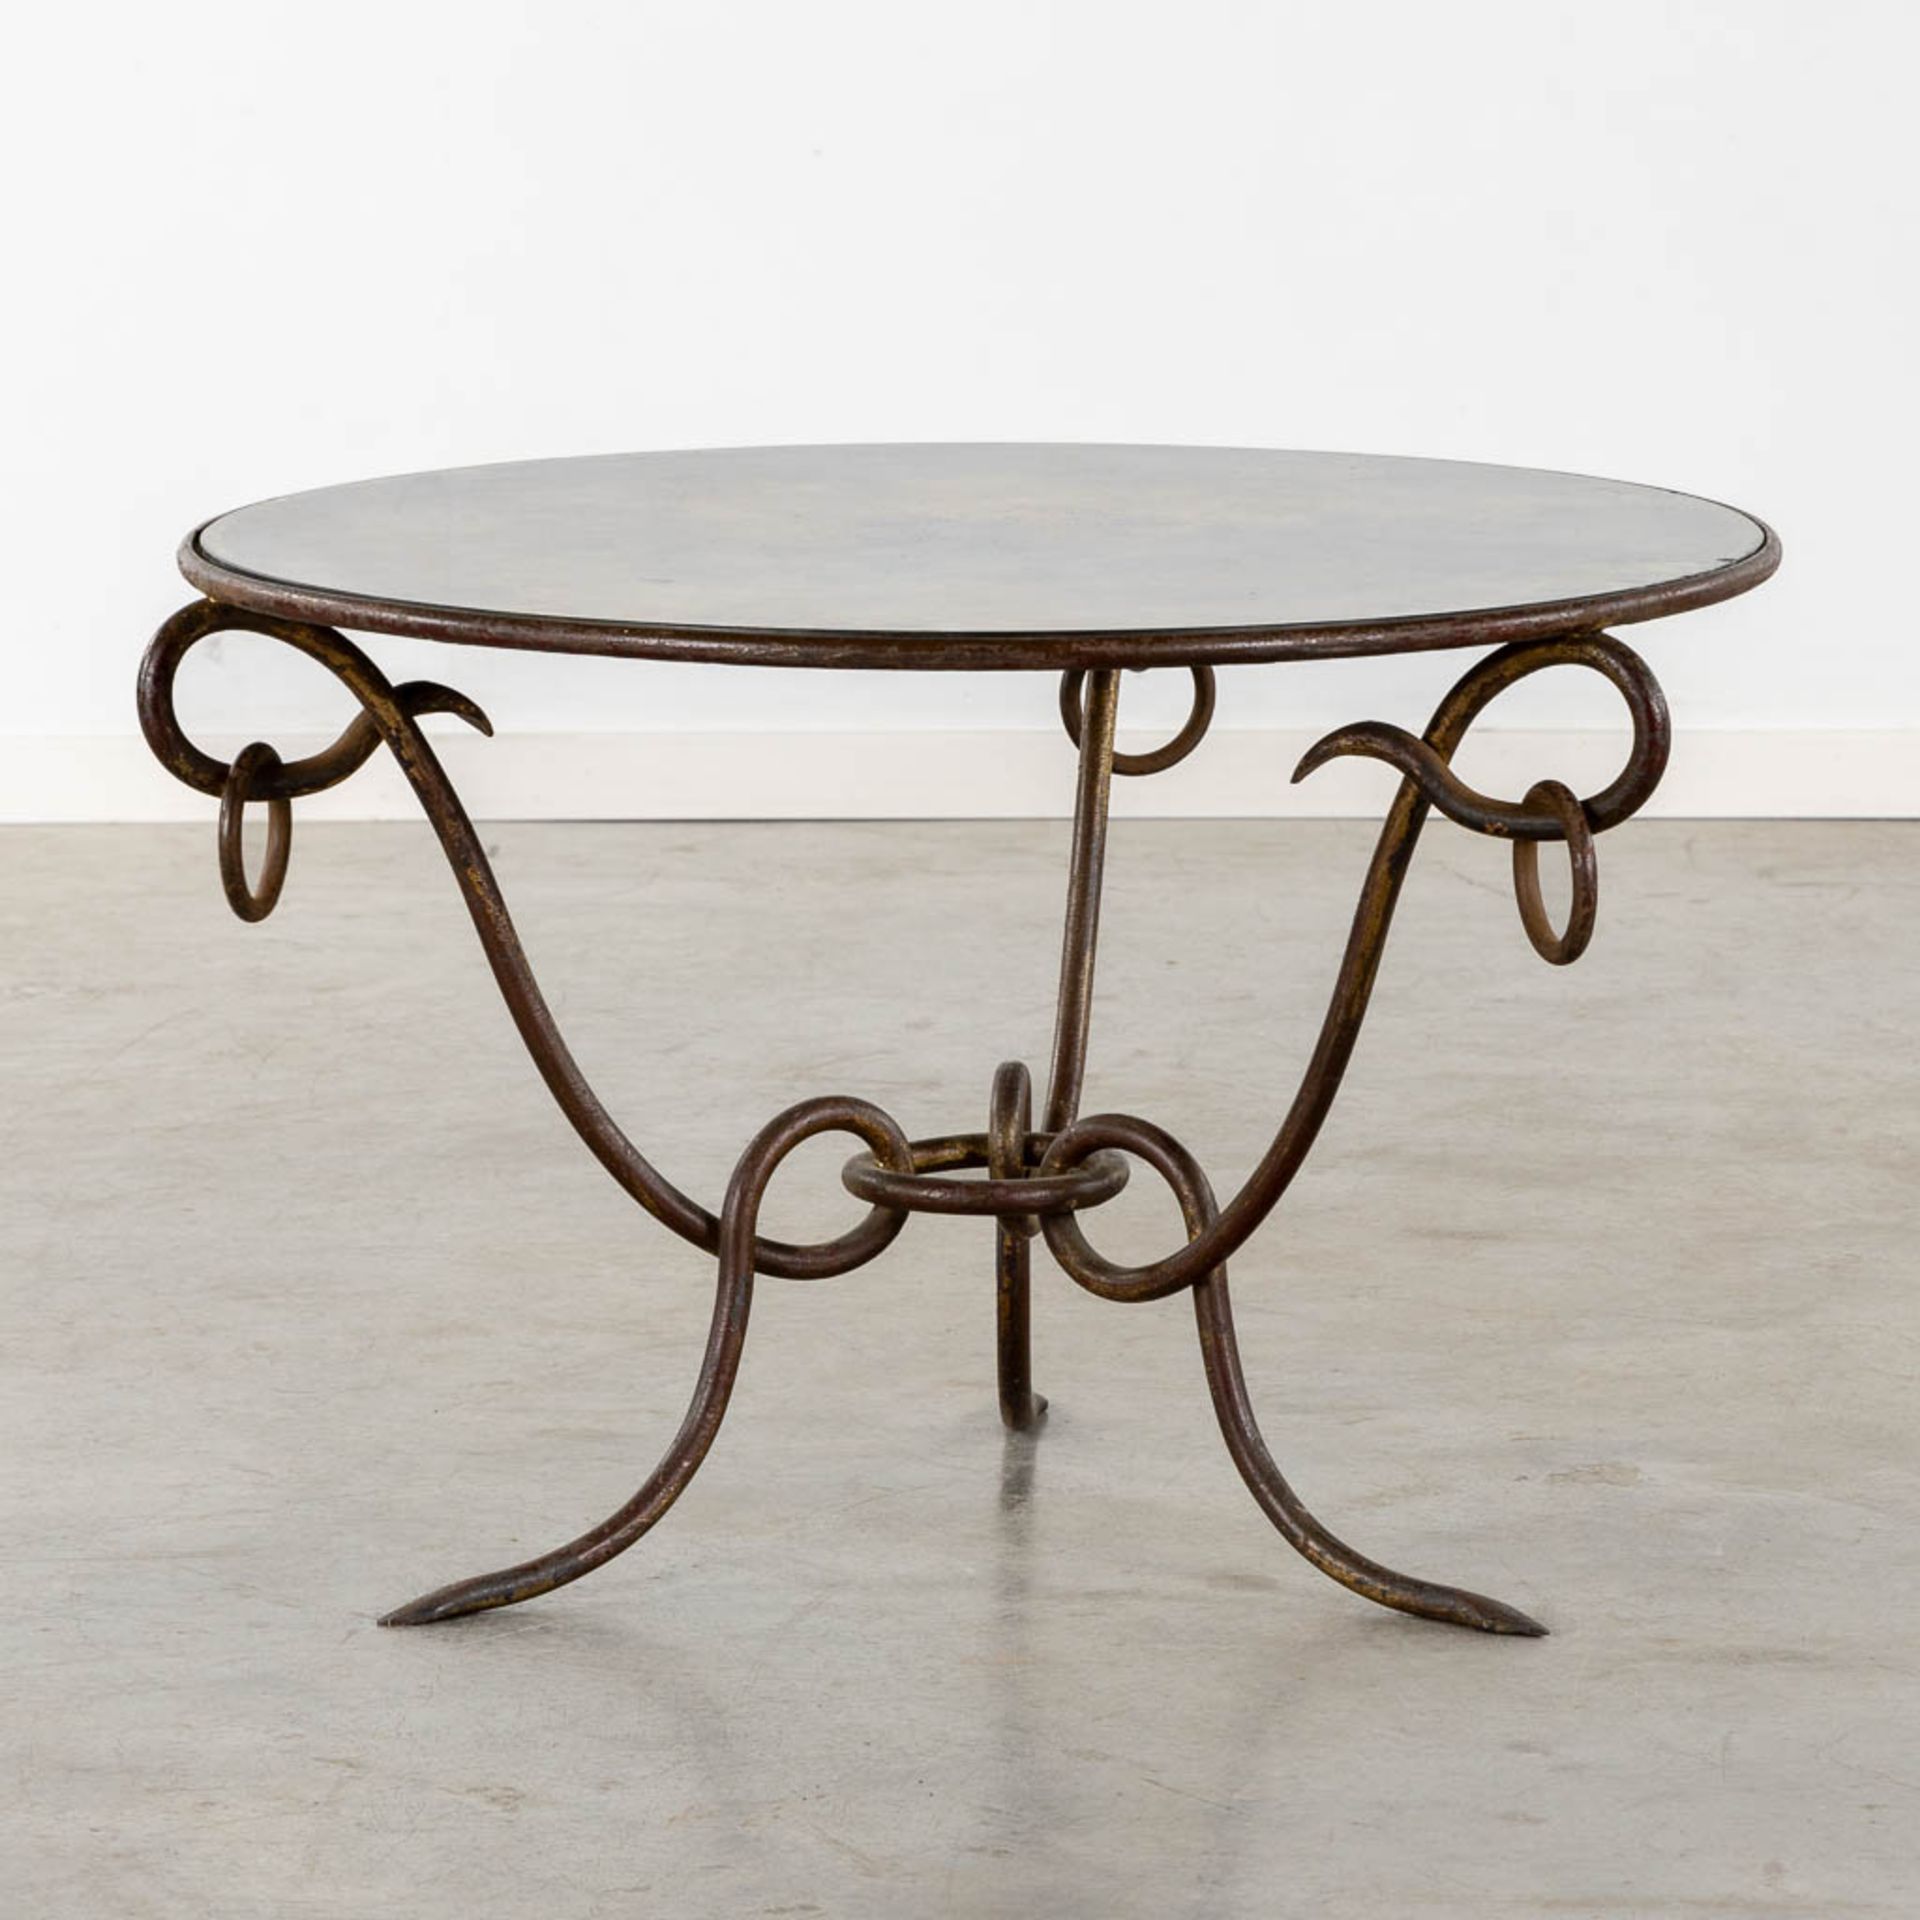 René DROUET (1899-1993) 'Round cofee table' (H:53 x D:84 cm) - Bild 4 aus 11